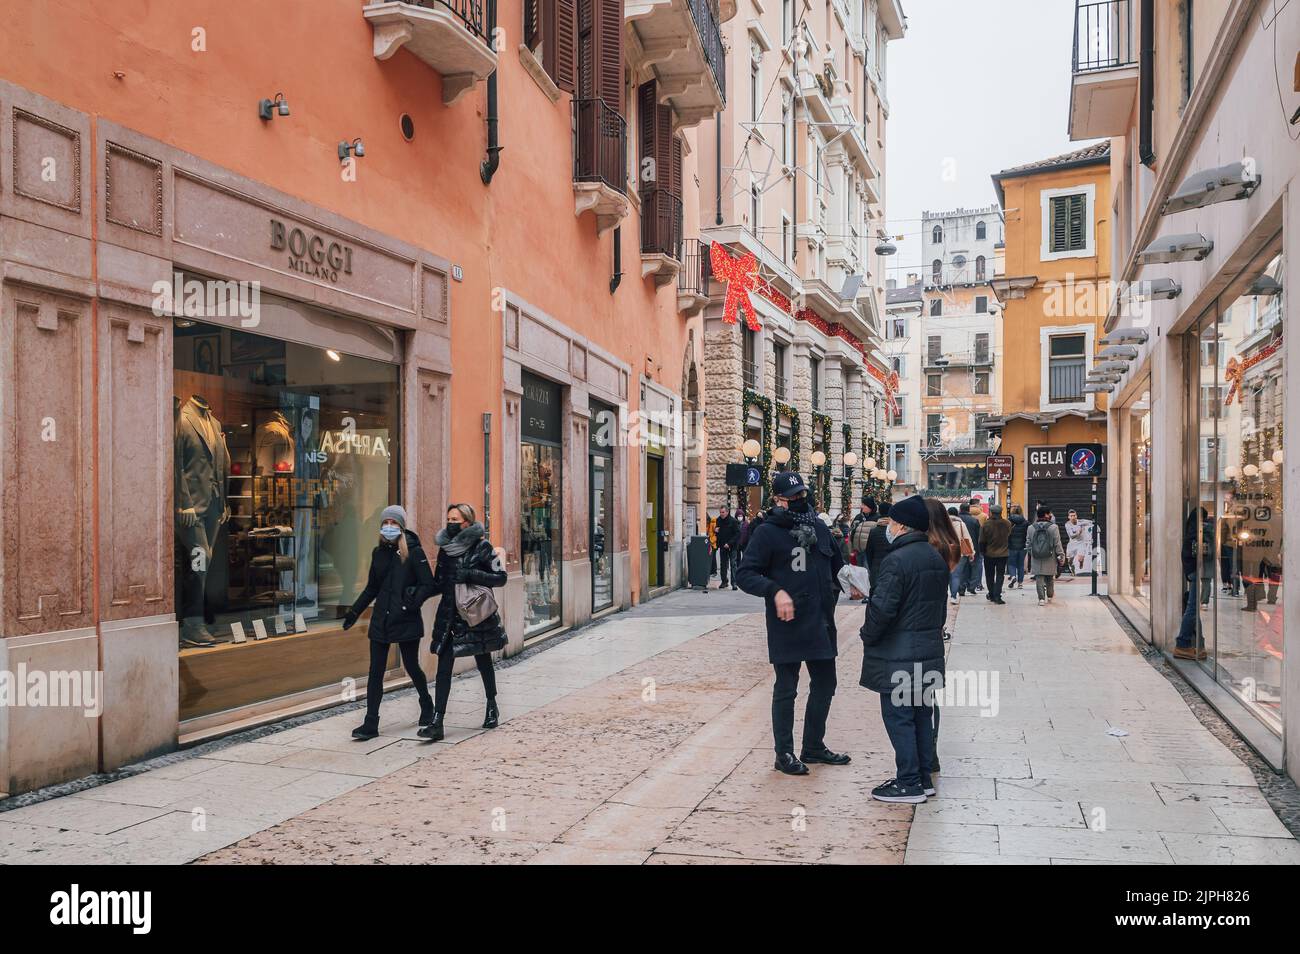 tourists crowd the fashionable, colourful pedestrianised Via Giuseppe Mazzini - Verona city, Veneto region, northern Italy - december 28, 2021 Stock Photo